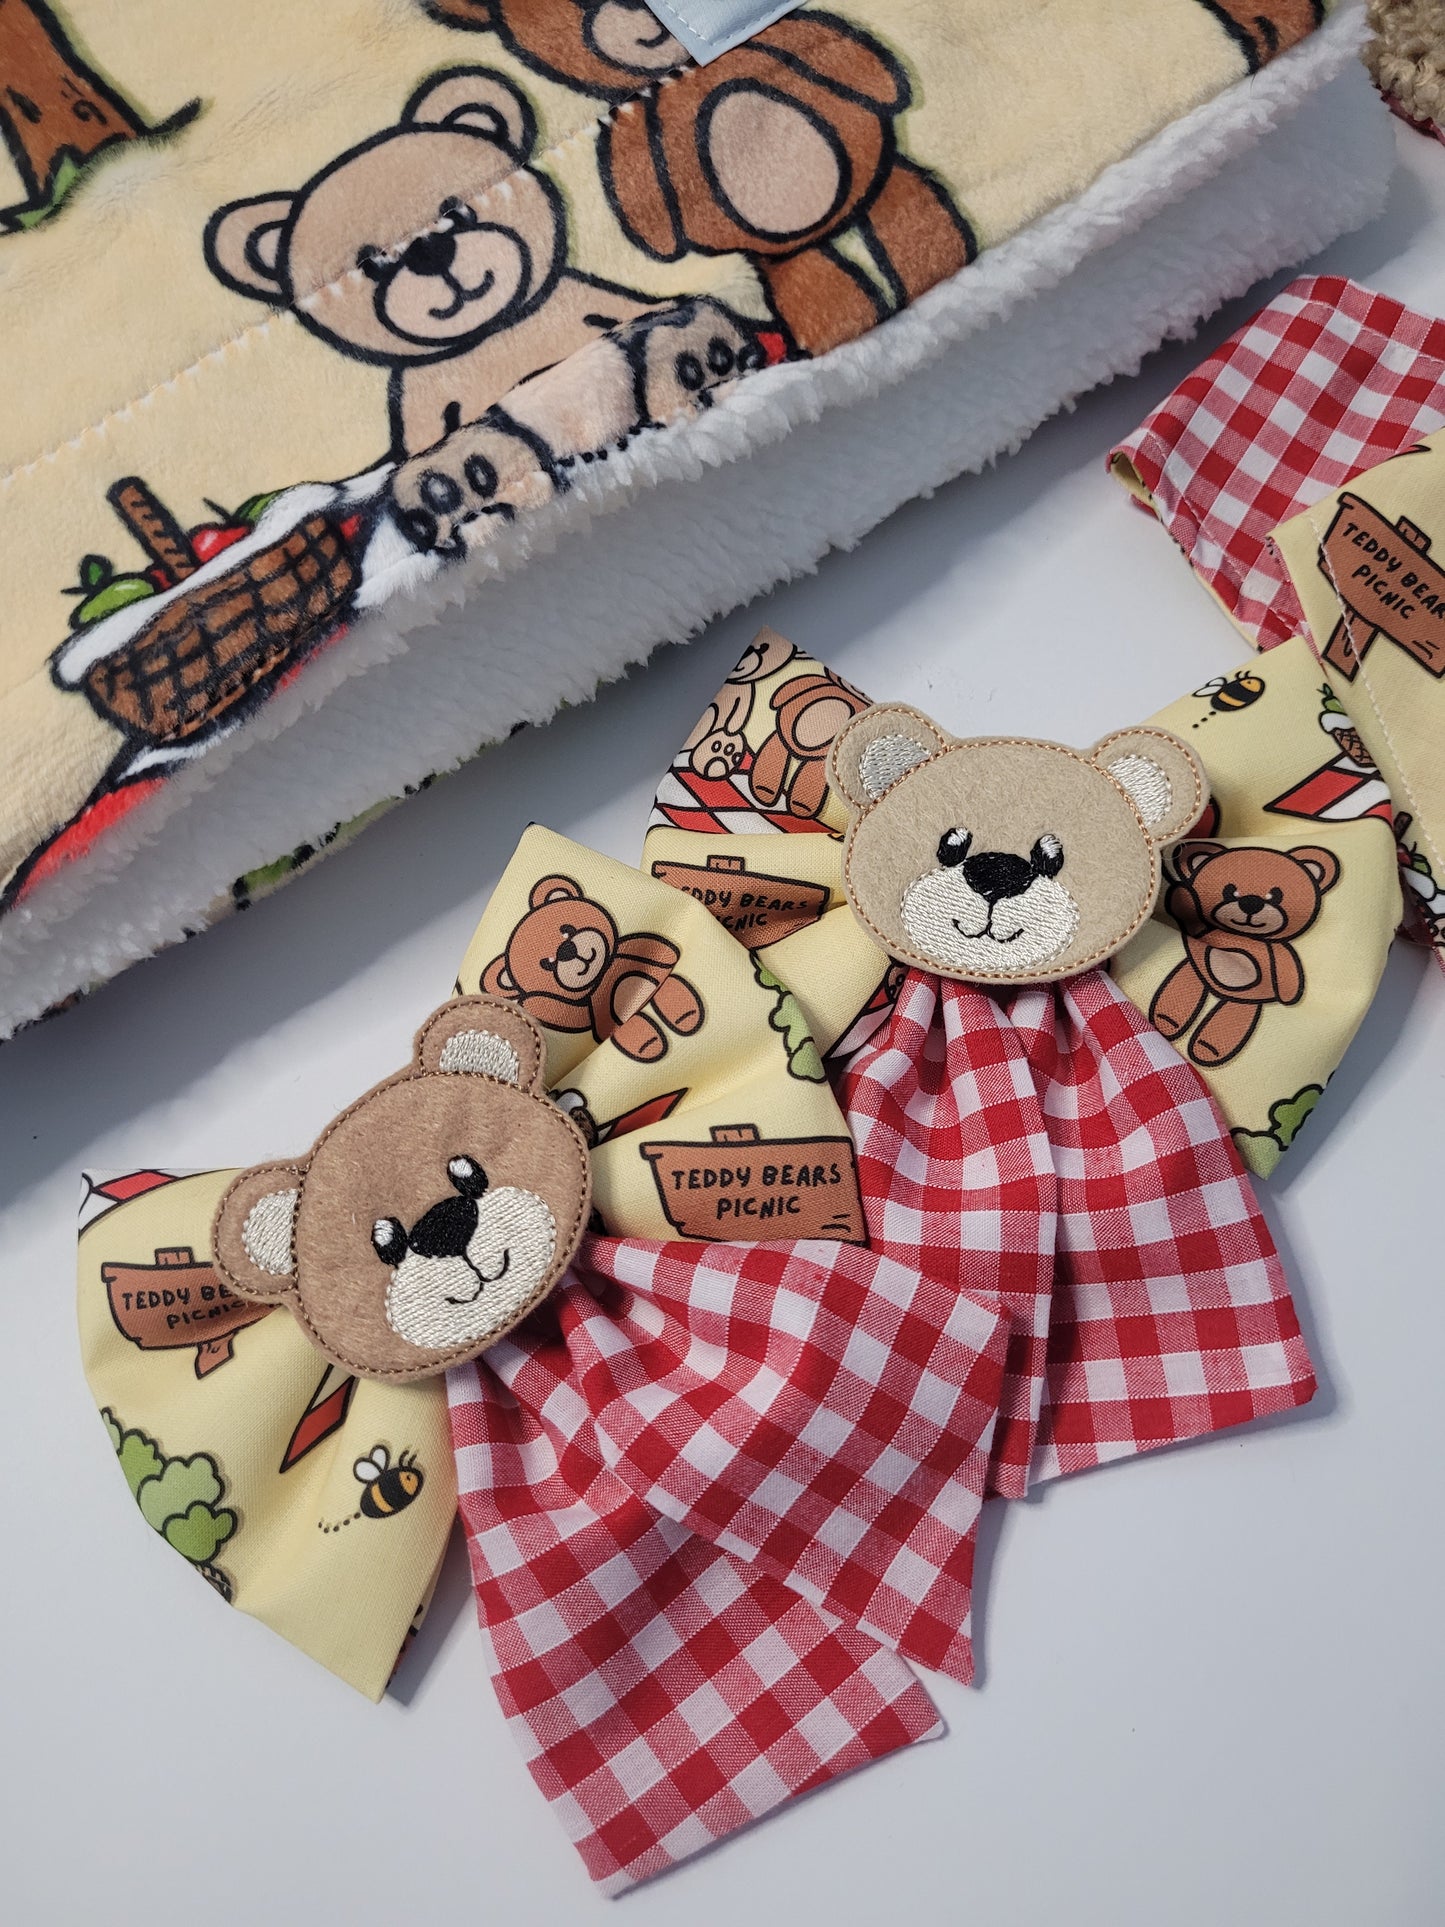 Teddy bears picnic embroidered sailor bow